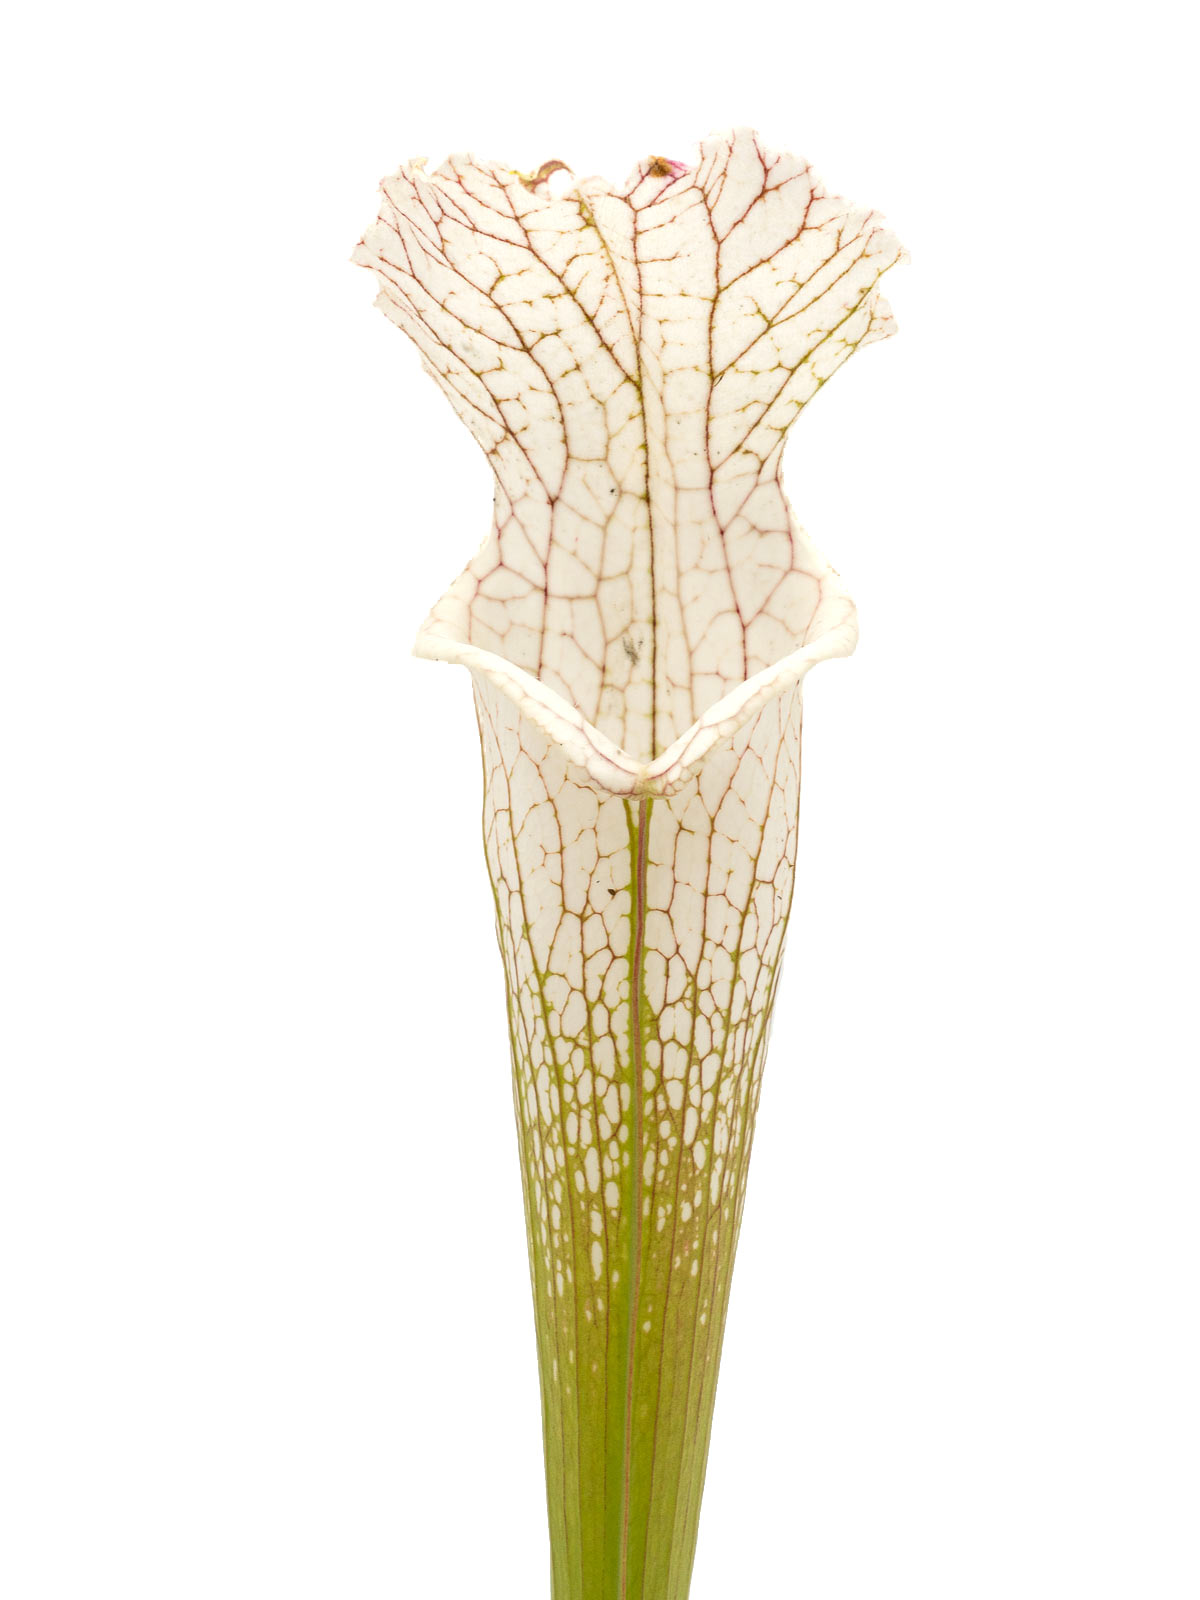 S. leucophylla - MK L39A, Citronelle, Mobile County, Alabama